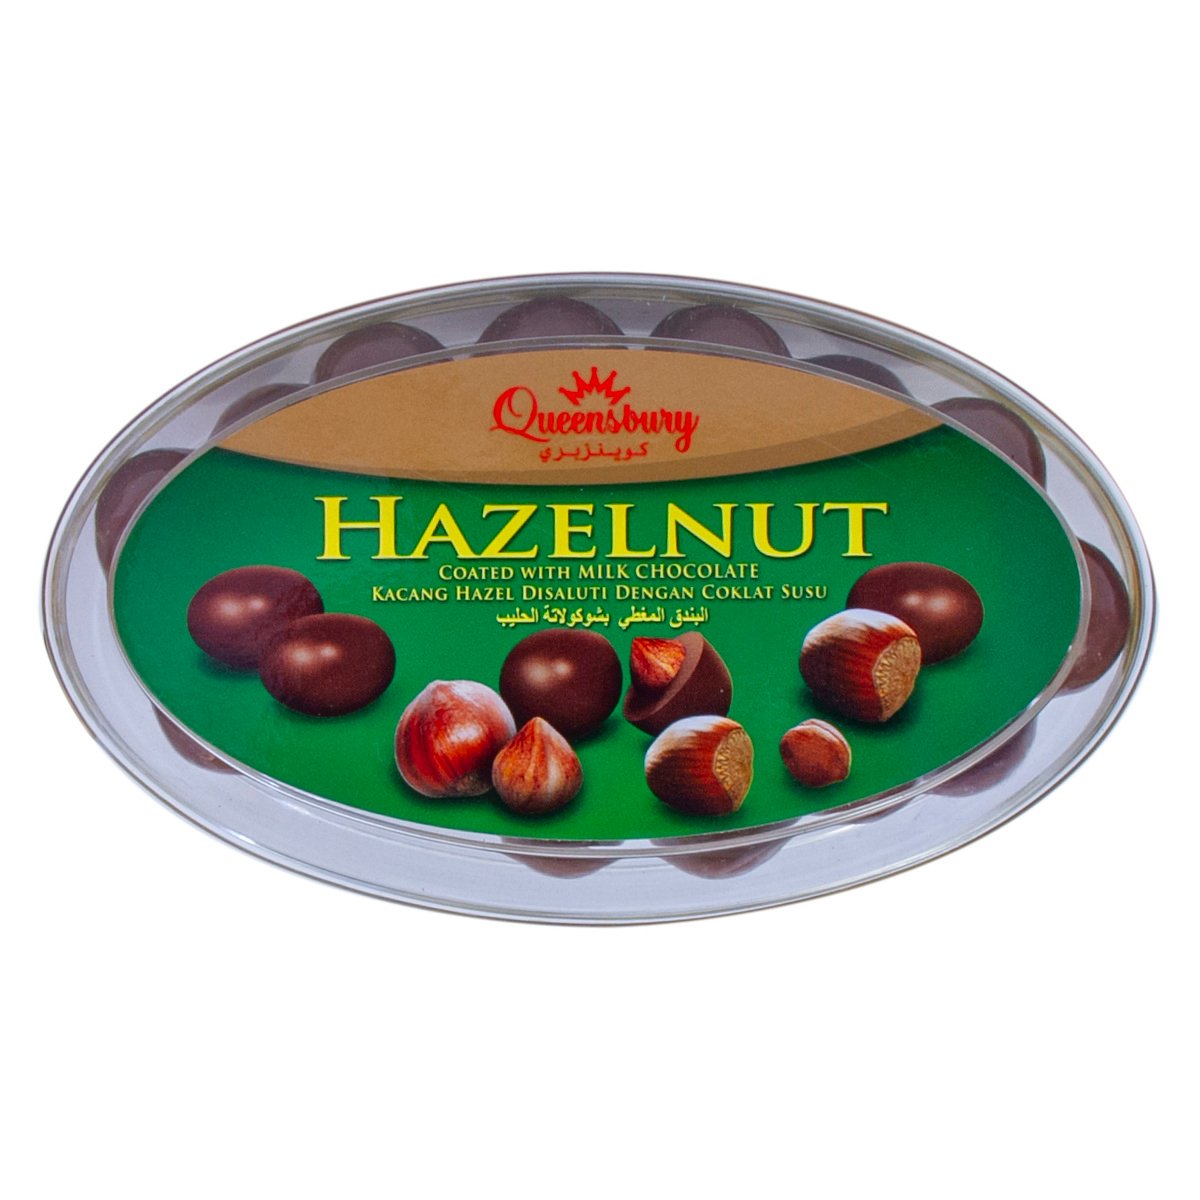 Queensbury Hazelnut Coated With Milk Chocolate 207 g